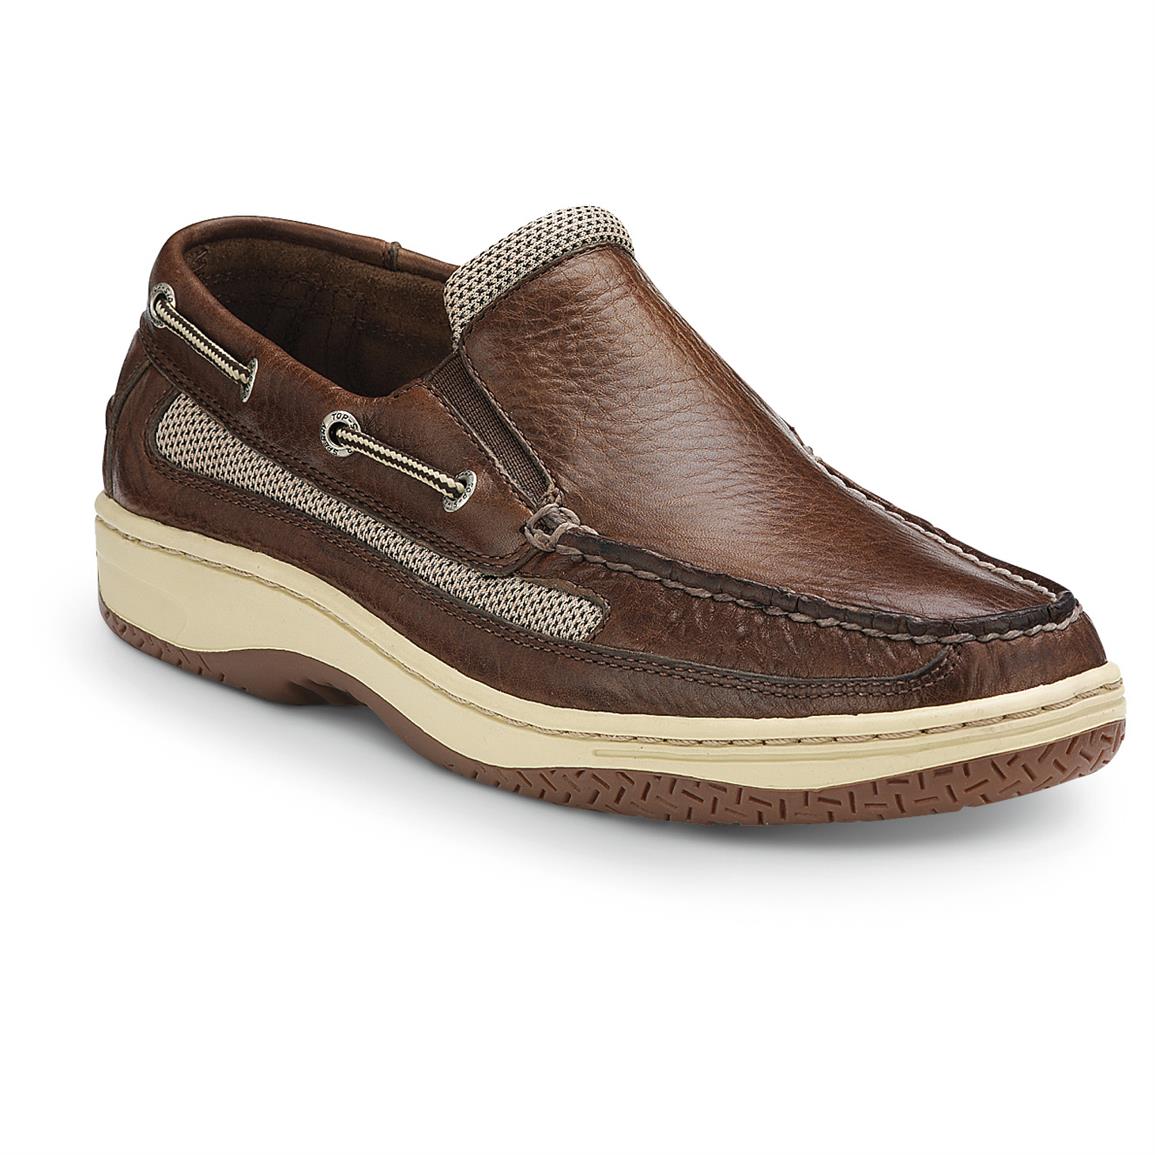 Sperry Top-Sider Men's Billfish Slip-On Boat Shoes - 669551, Boat ...